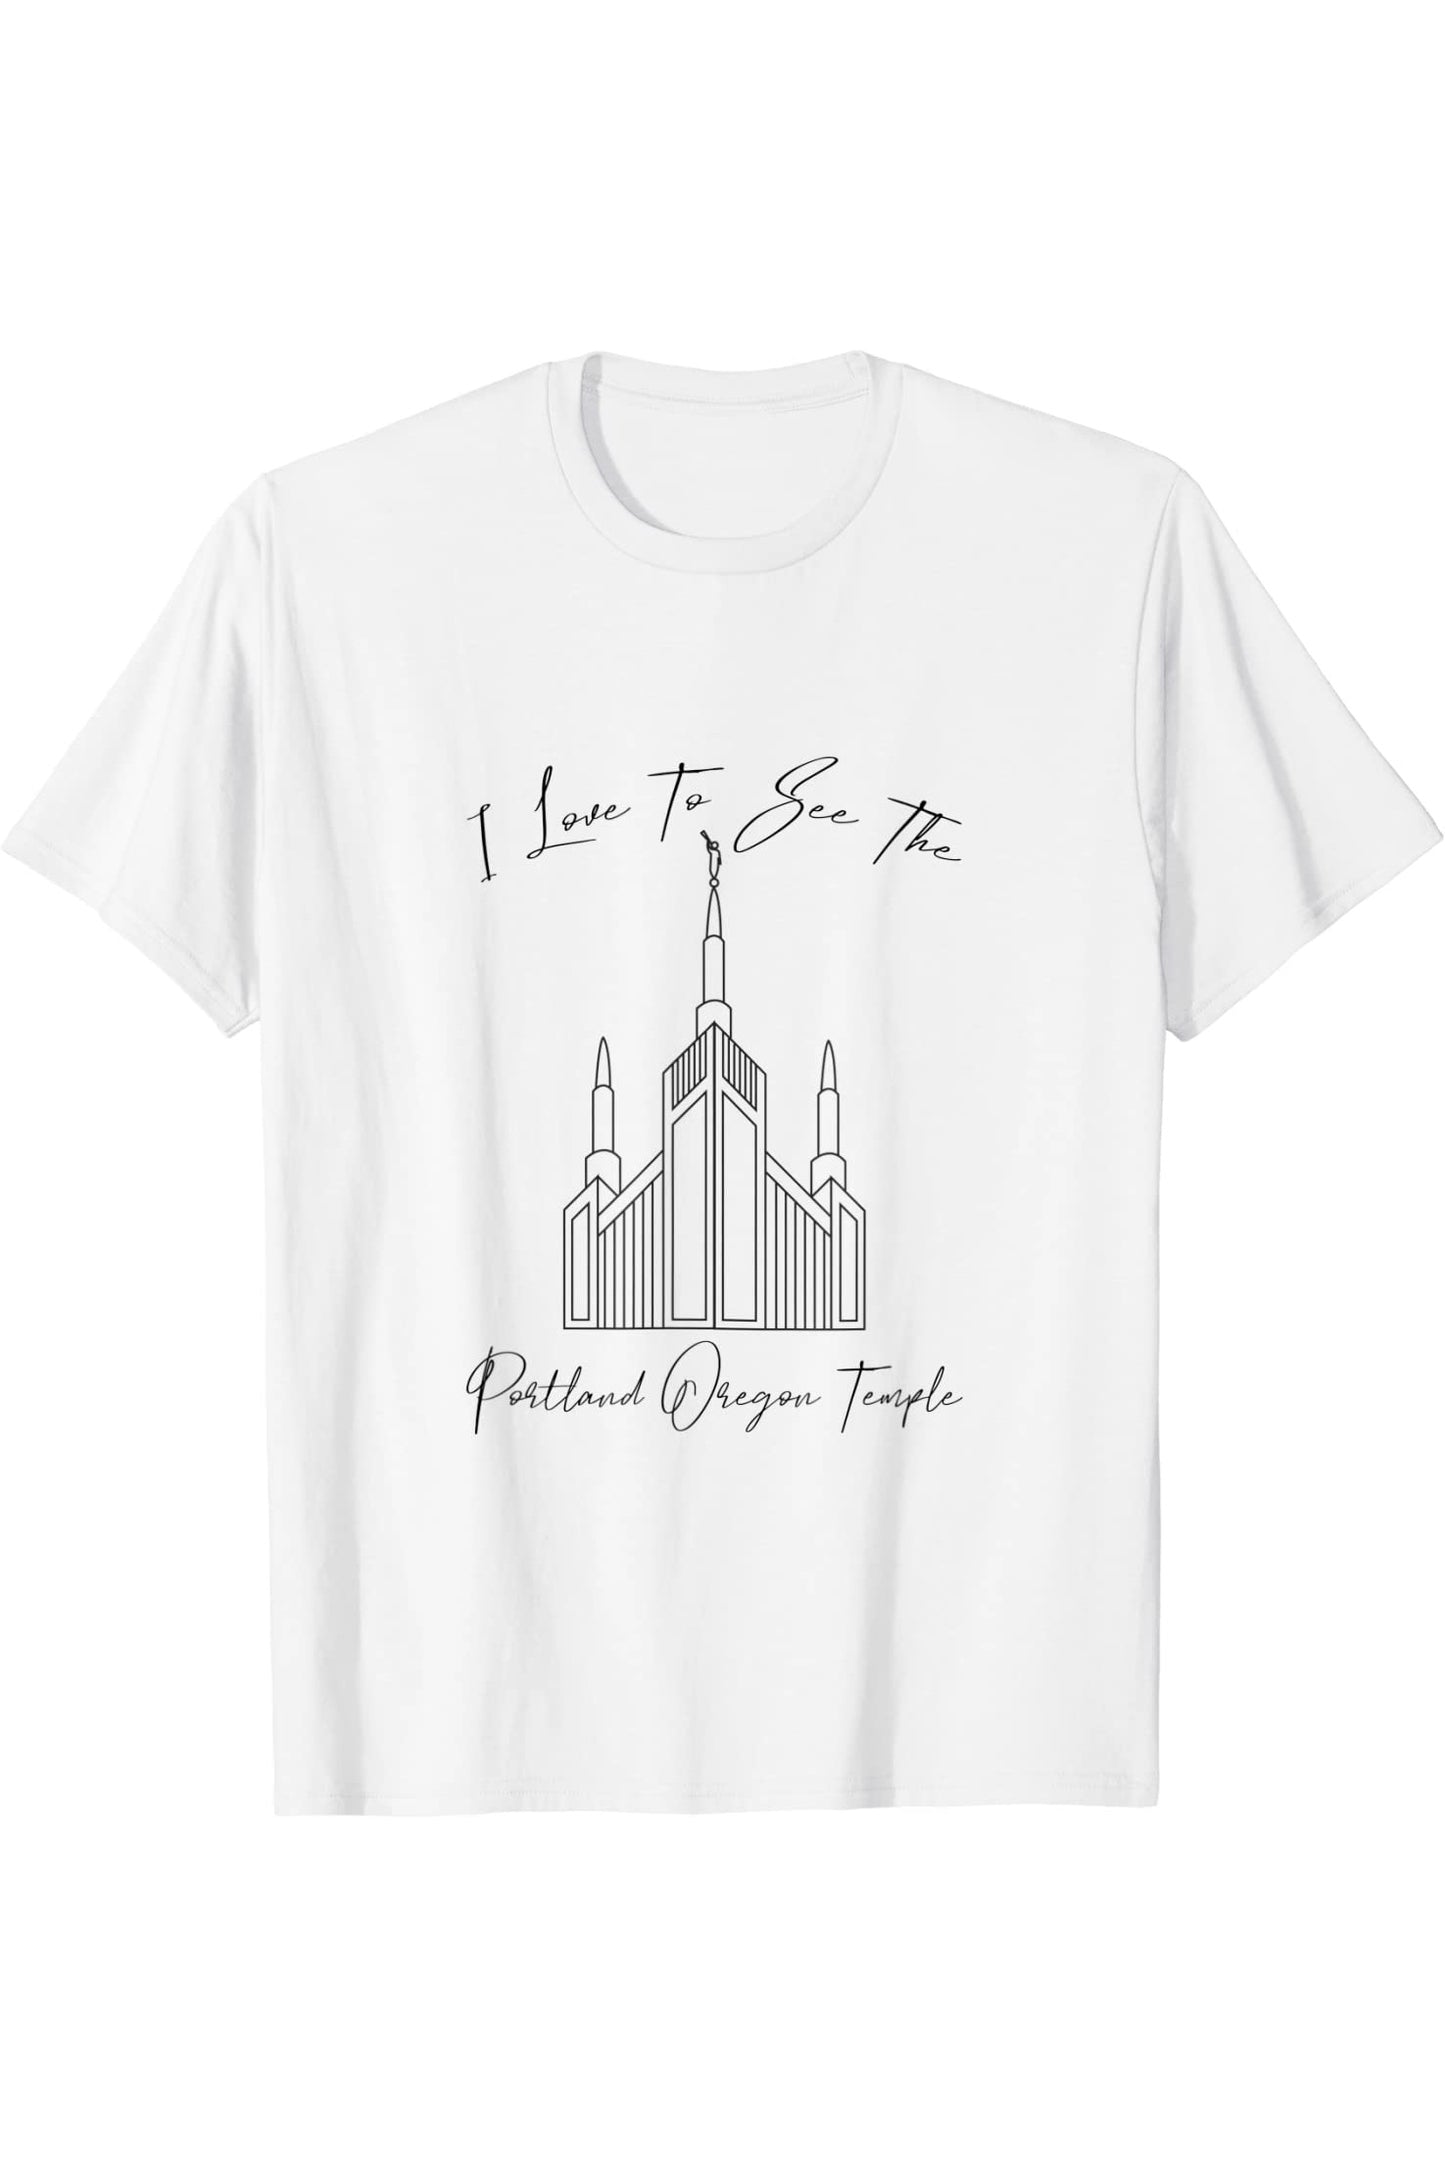 Portland Oregon Temple T-Shirt - Calligraphy Style (English) US